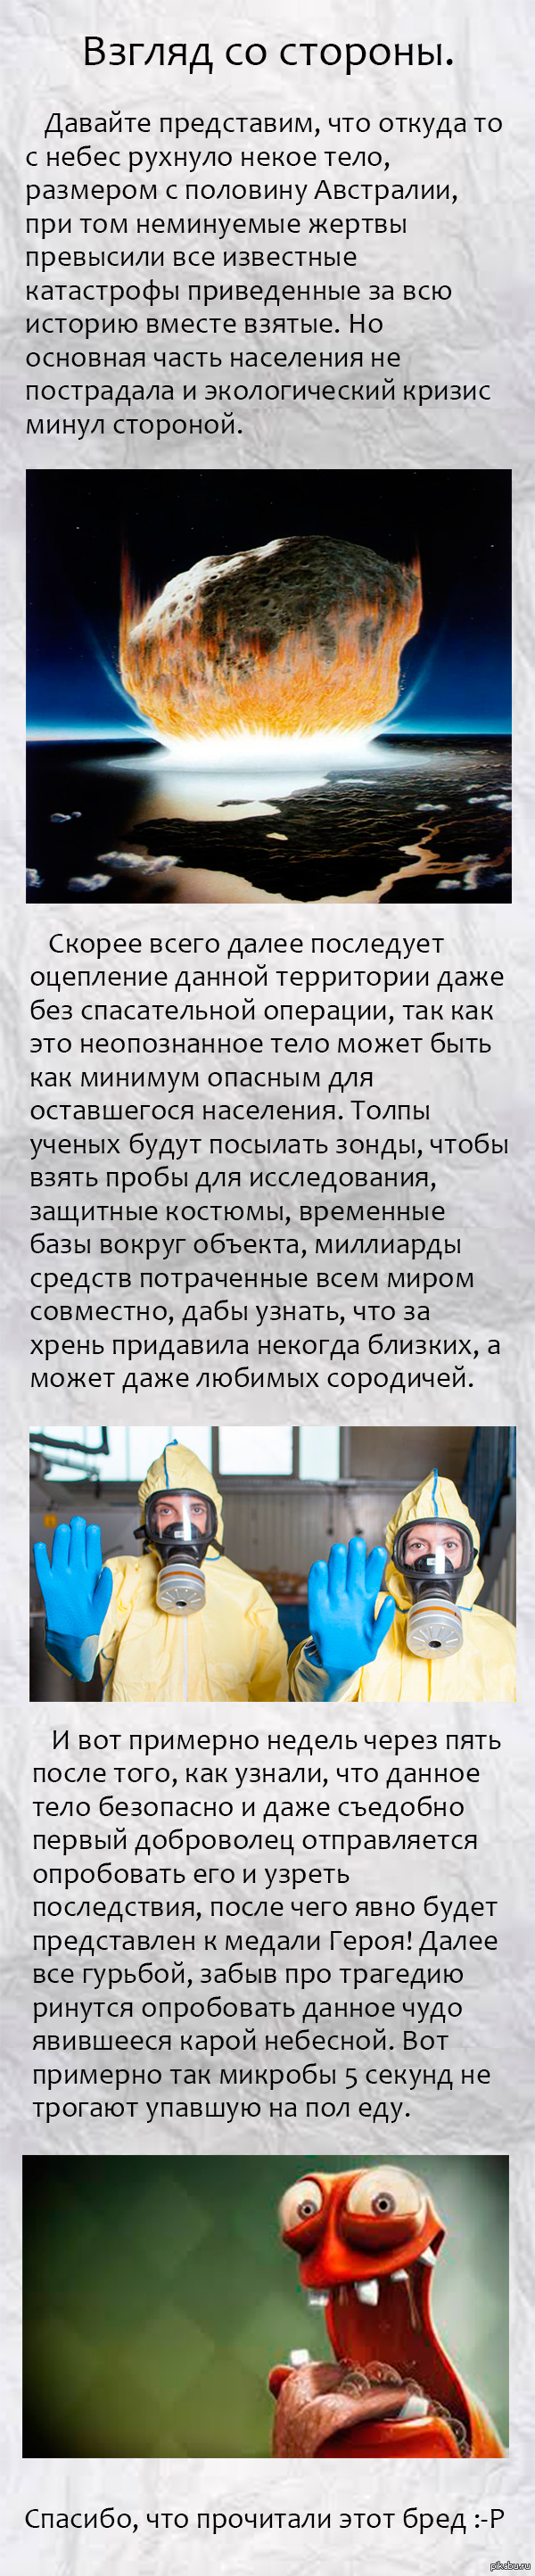 http://s4.pikabu.ru/post_img/2014/11/12/5/1415777904_857683301.jpg